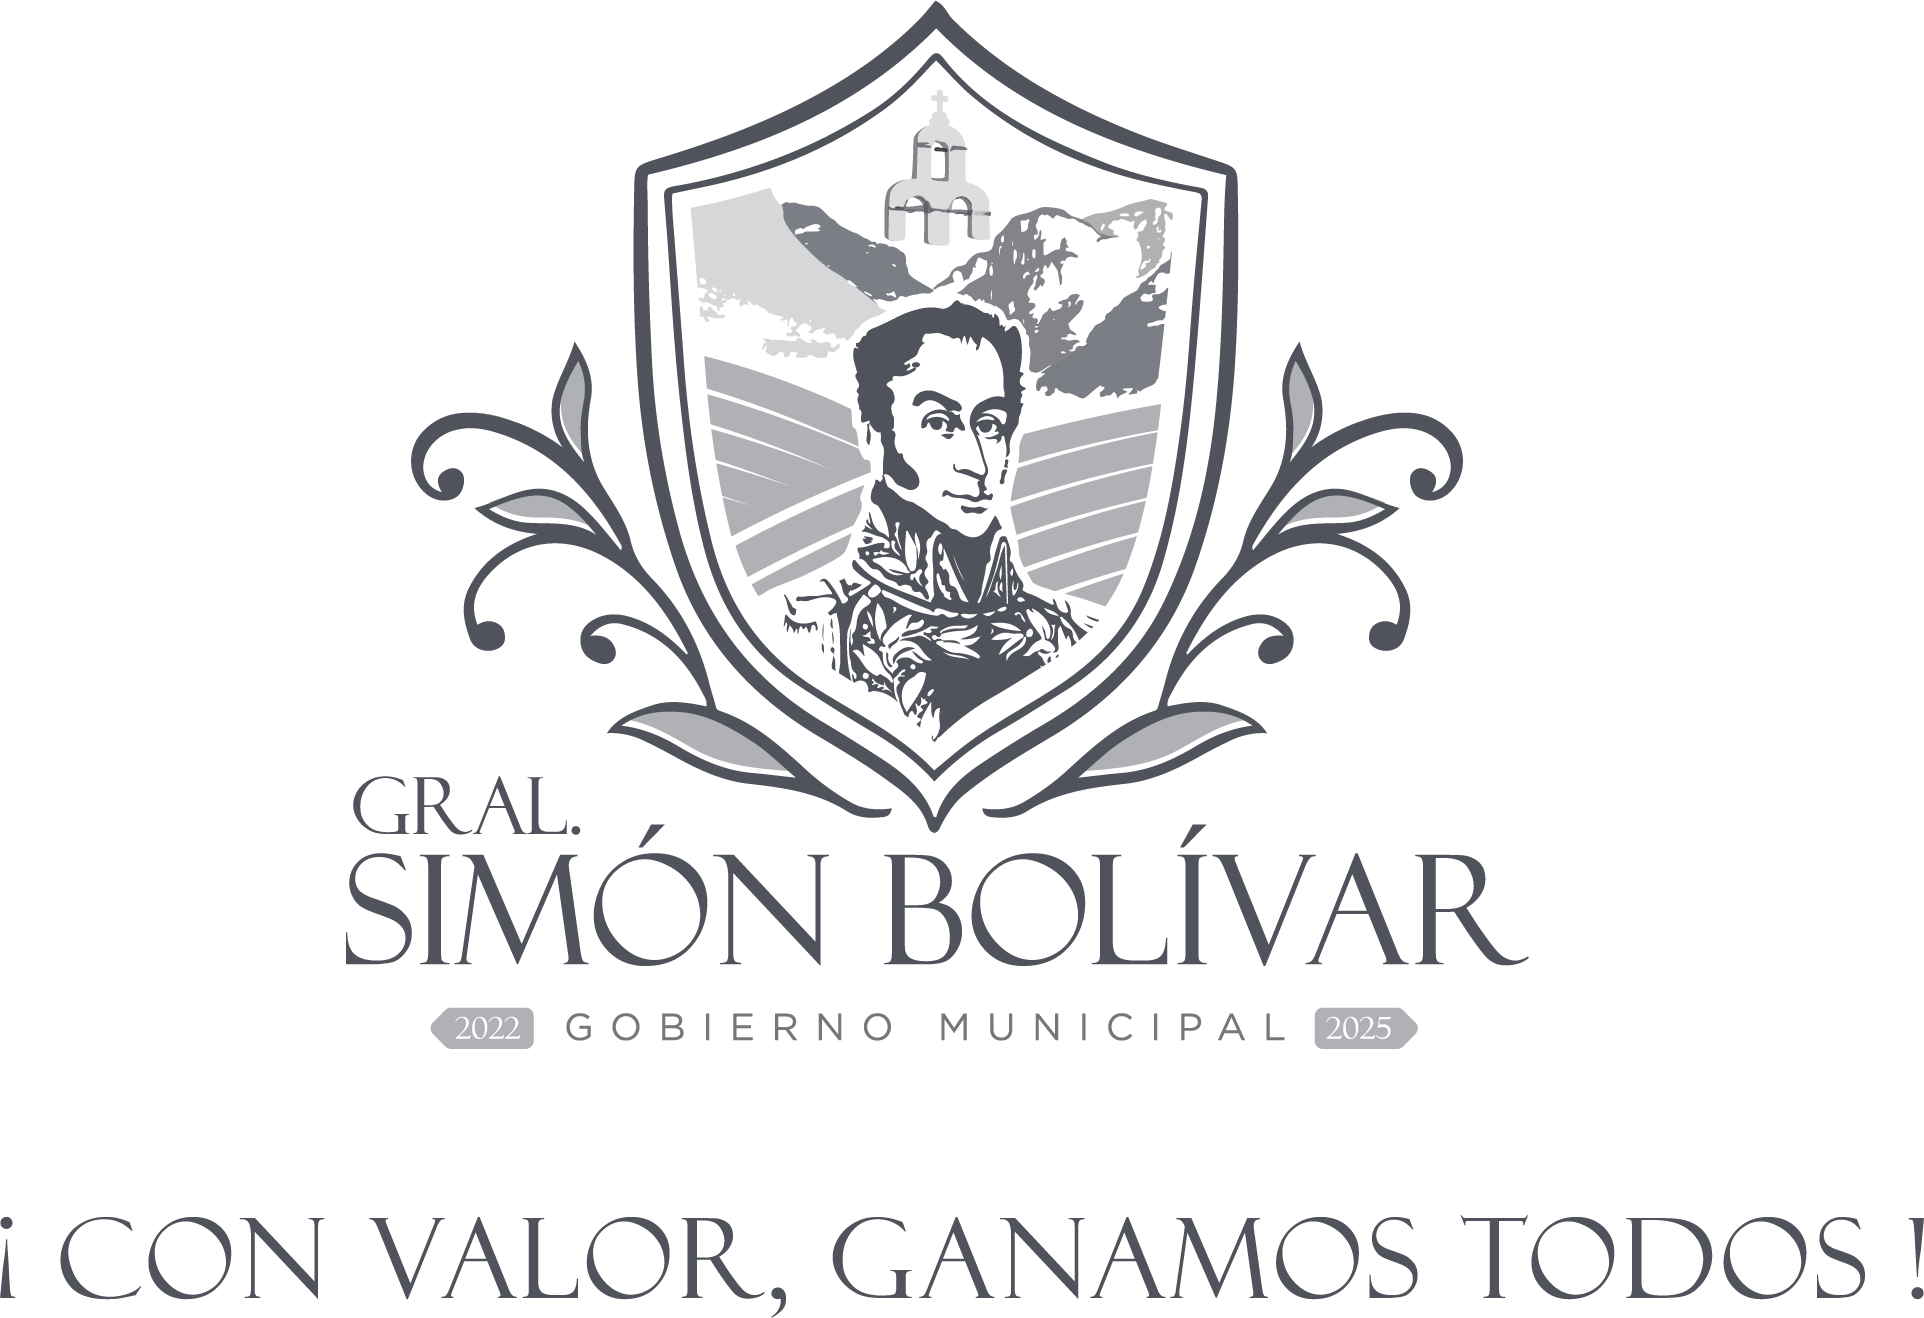 General Simon Bolivar Logotipo